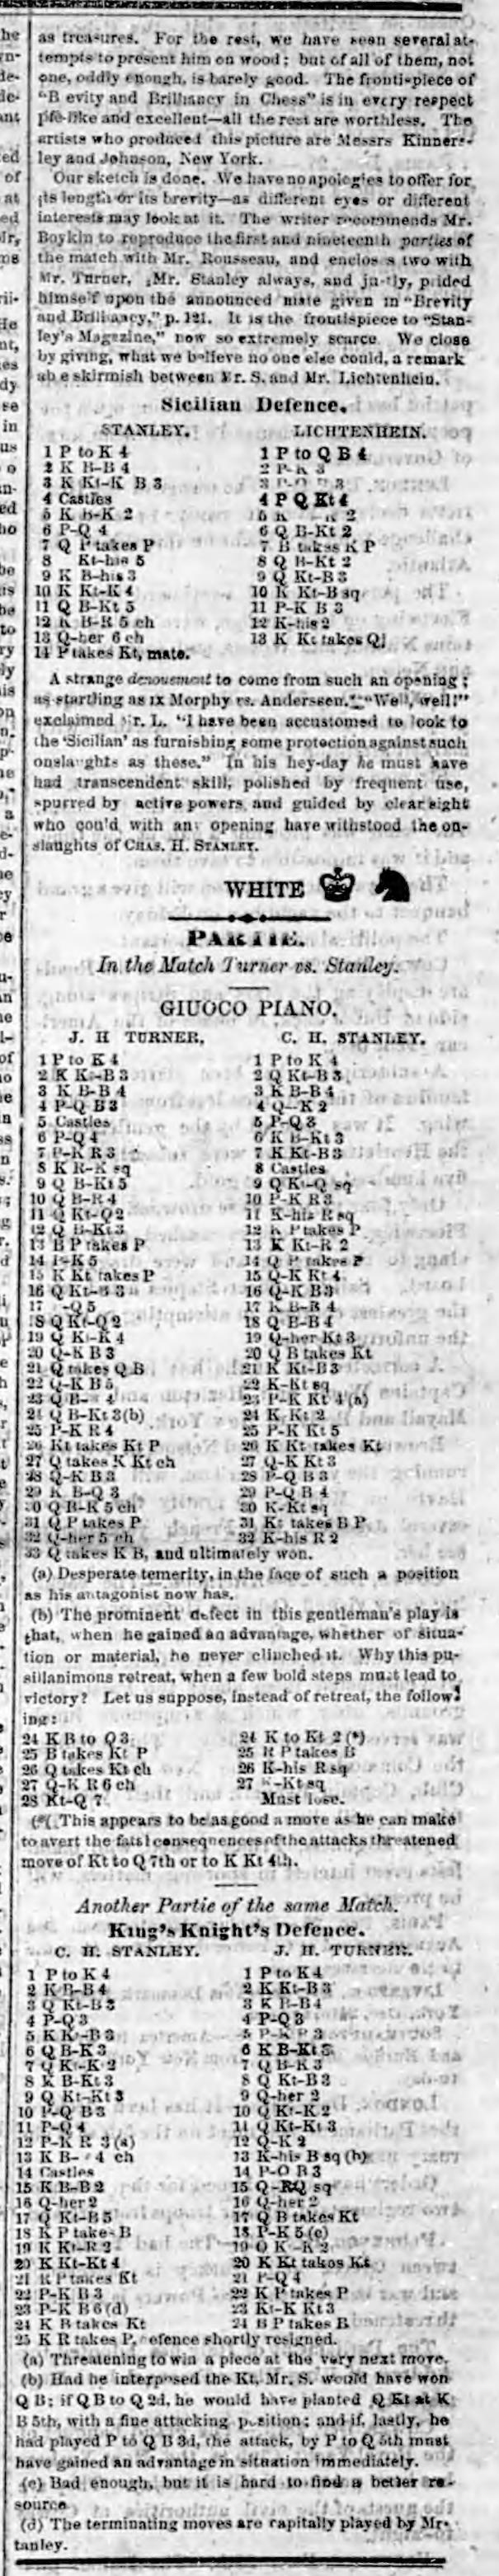 1867.01.07-03 Macon Georgia Weekly Telegraph.jpg